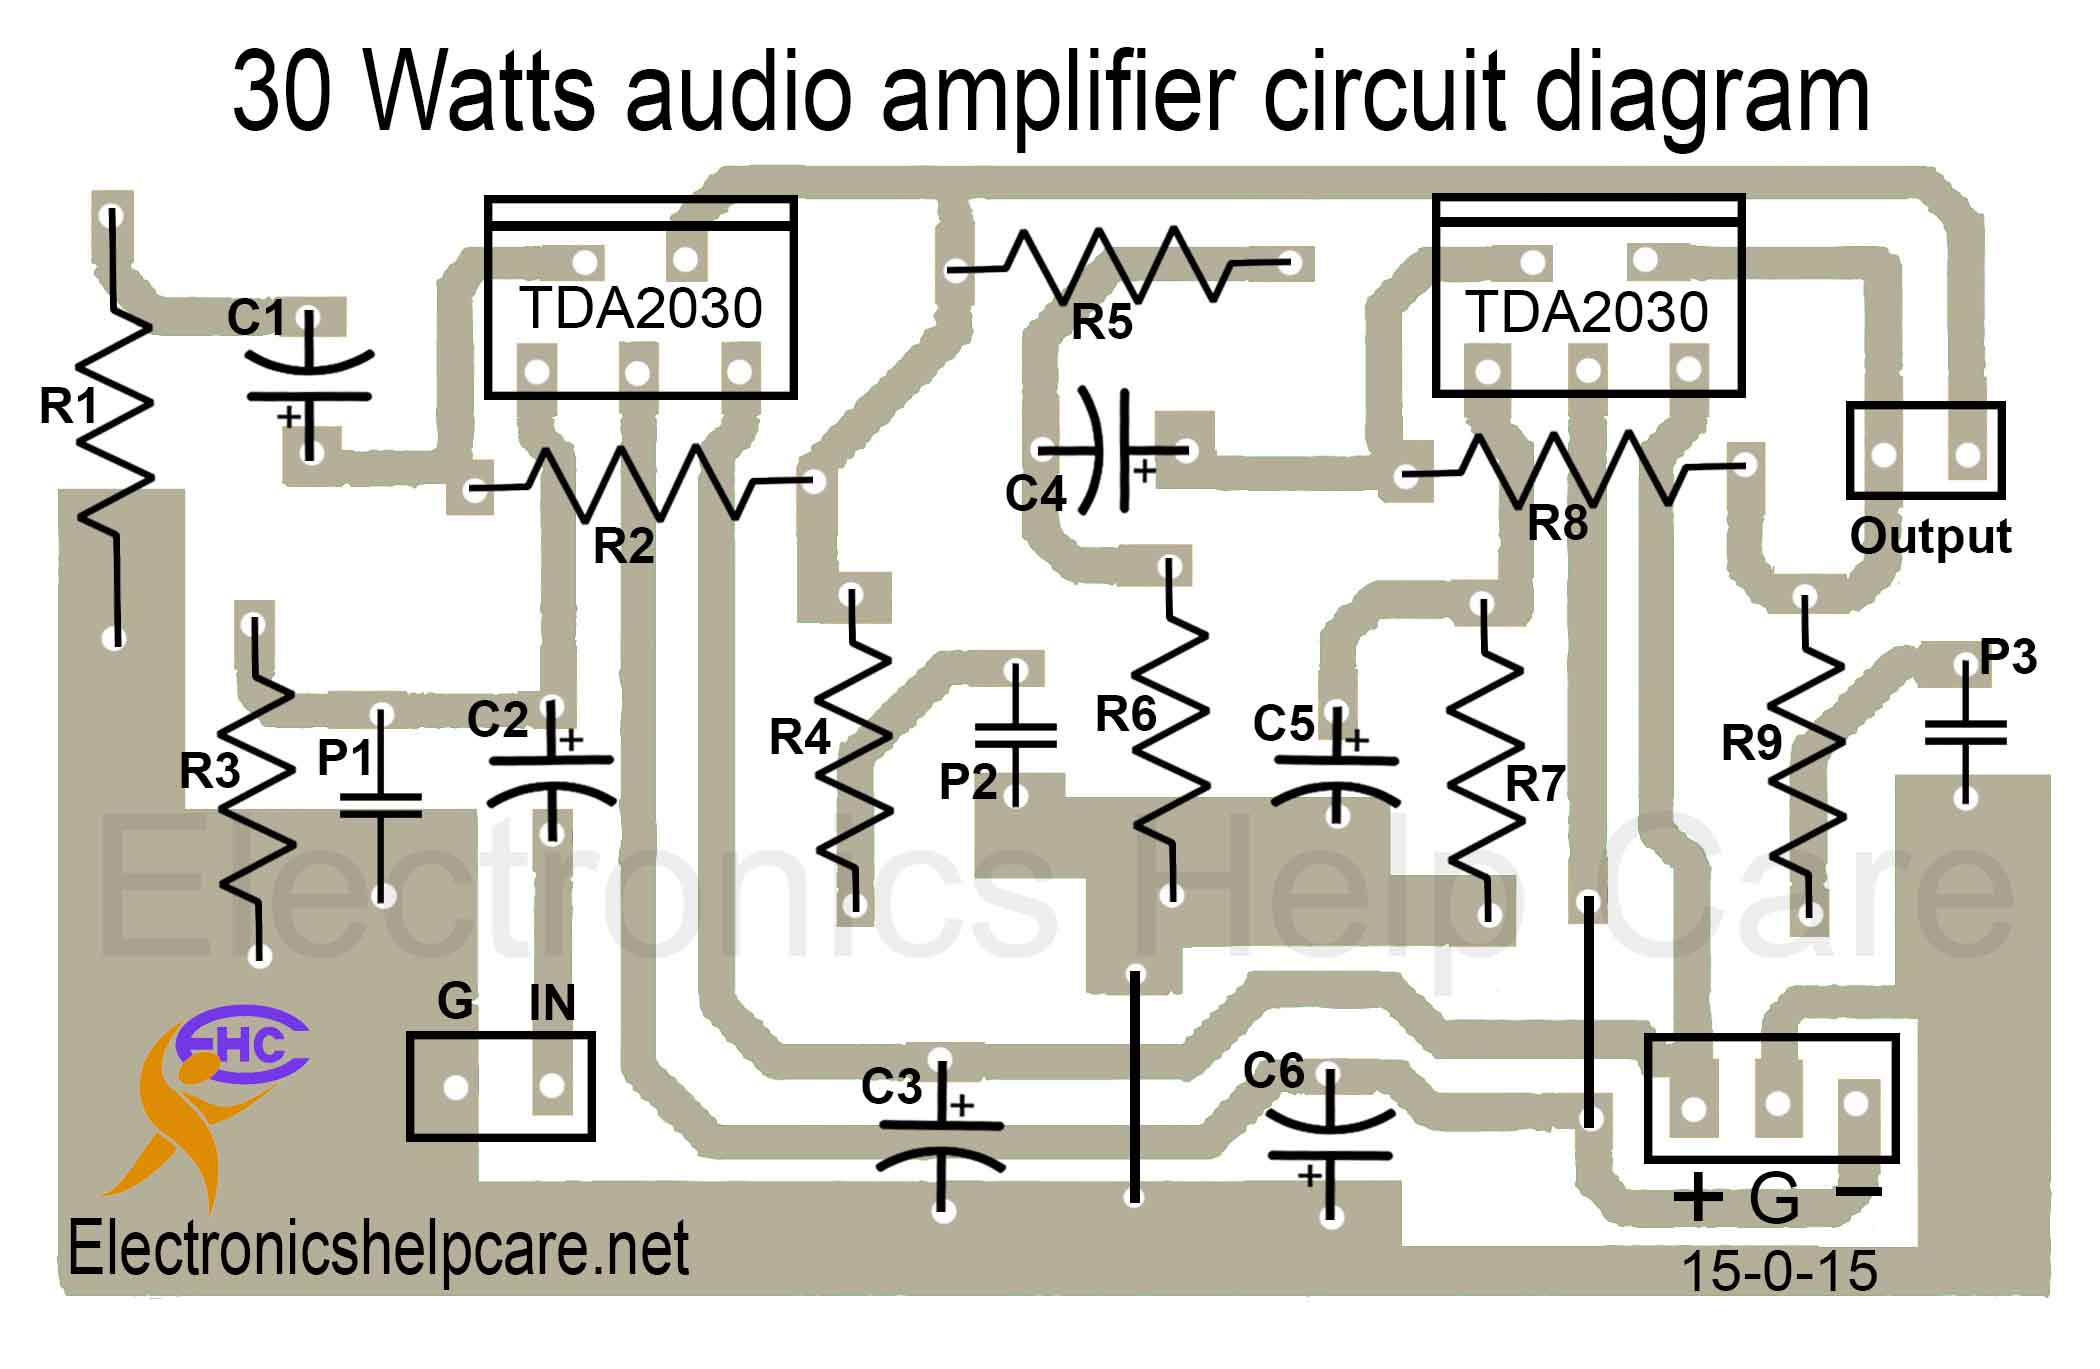 Audio amplifier circuit using TDA2030